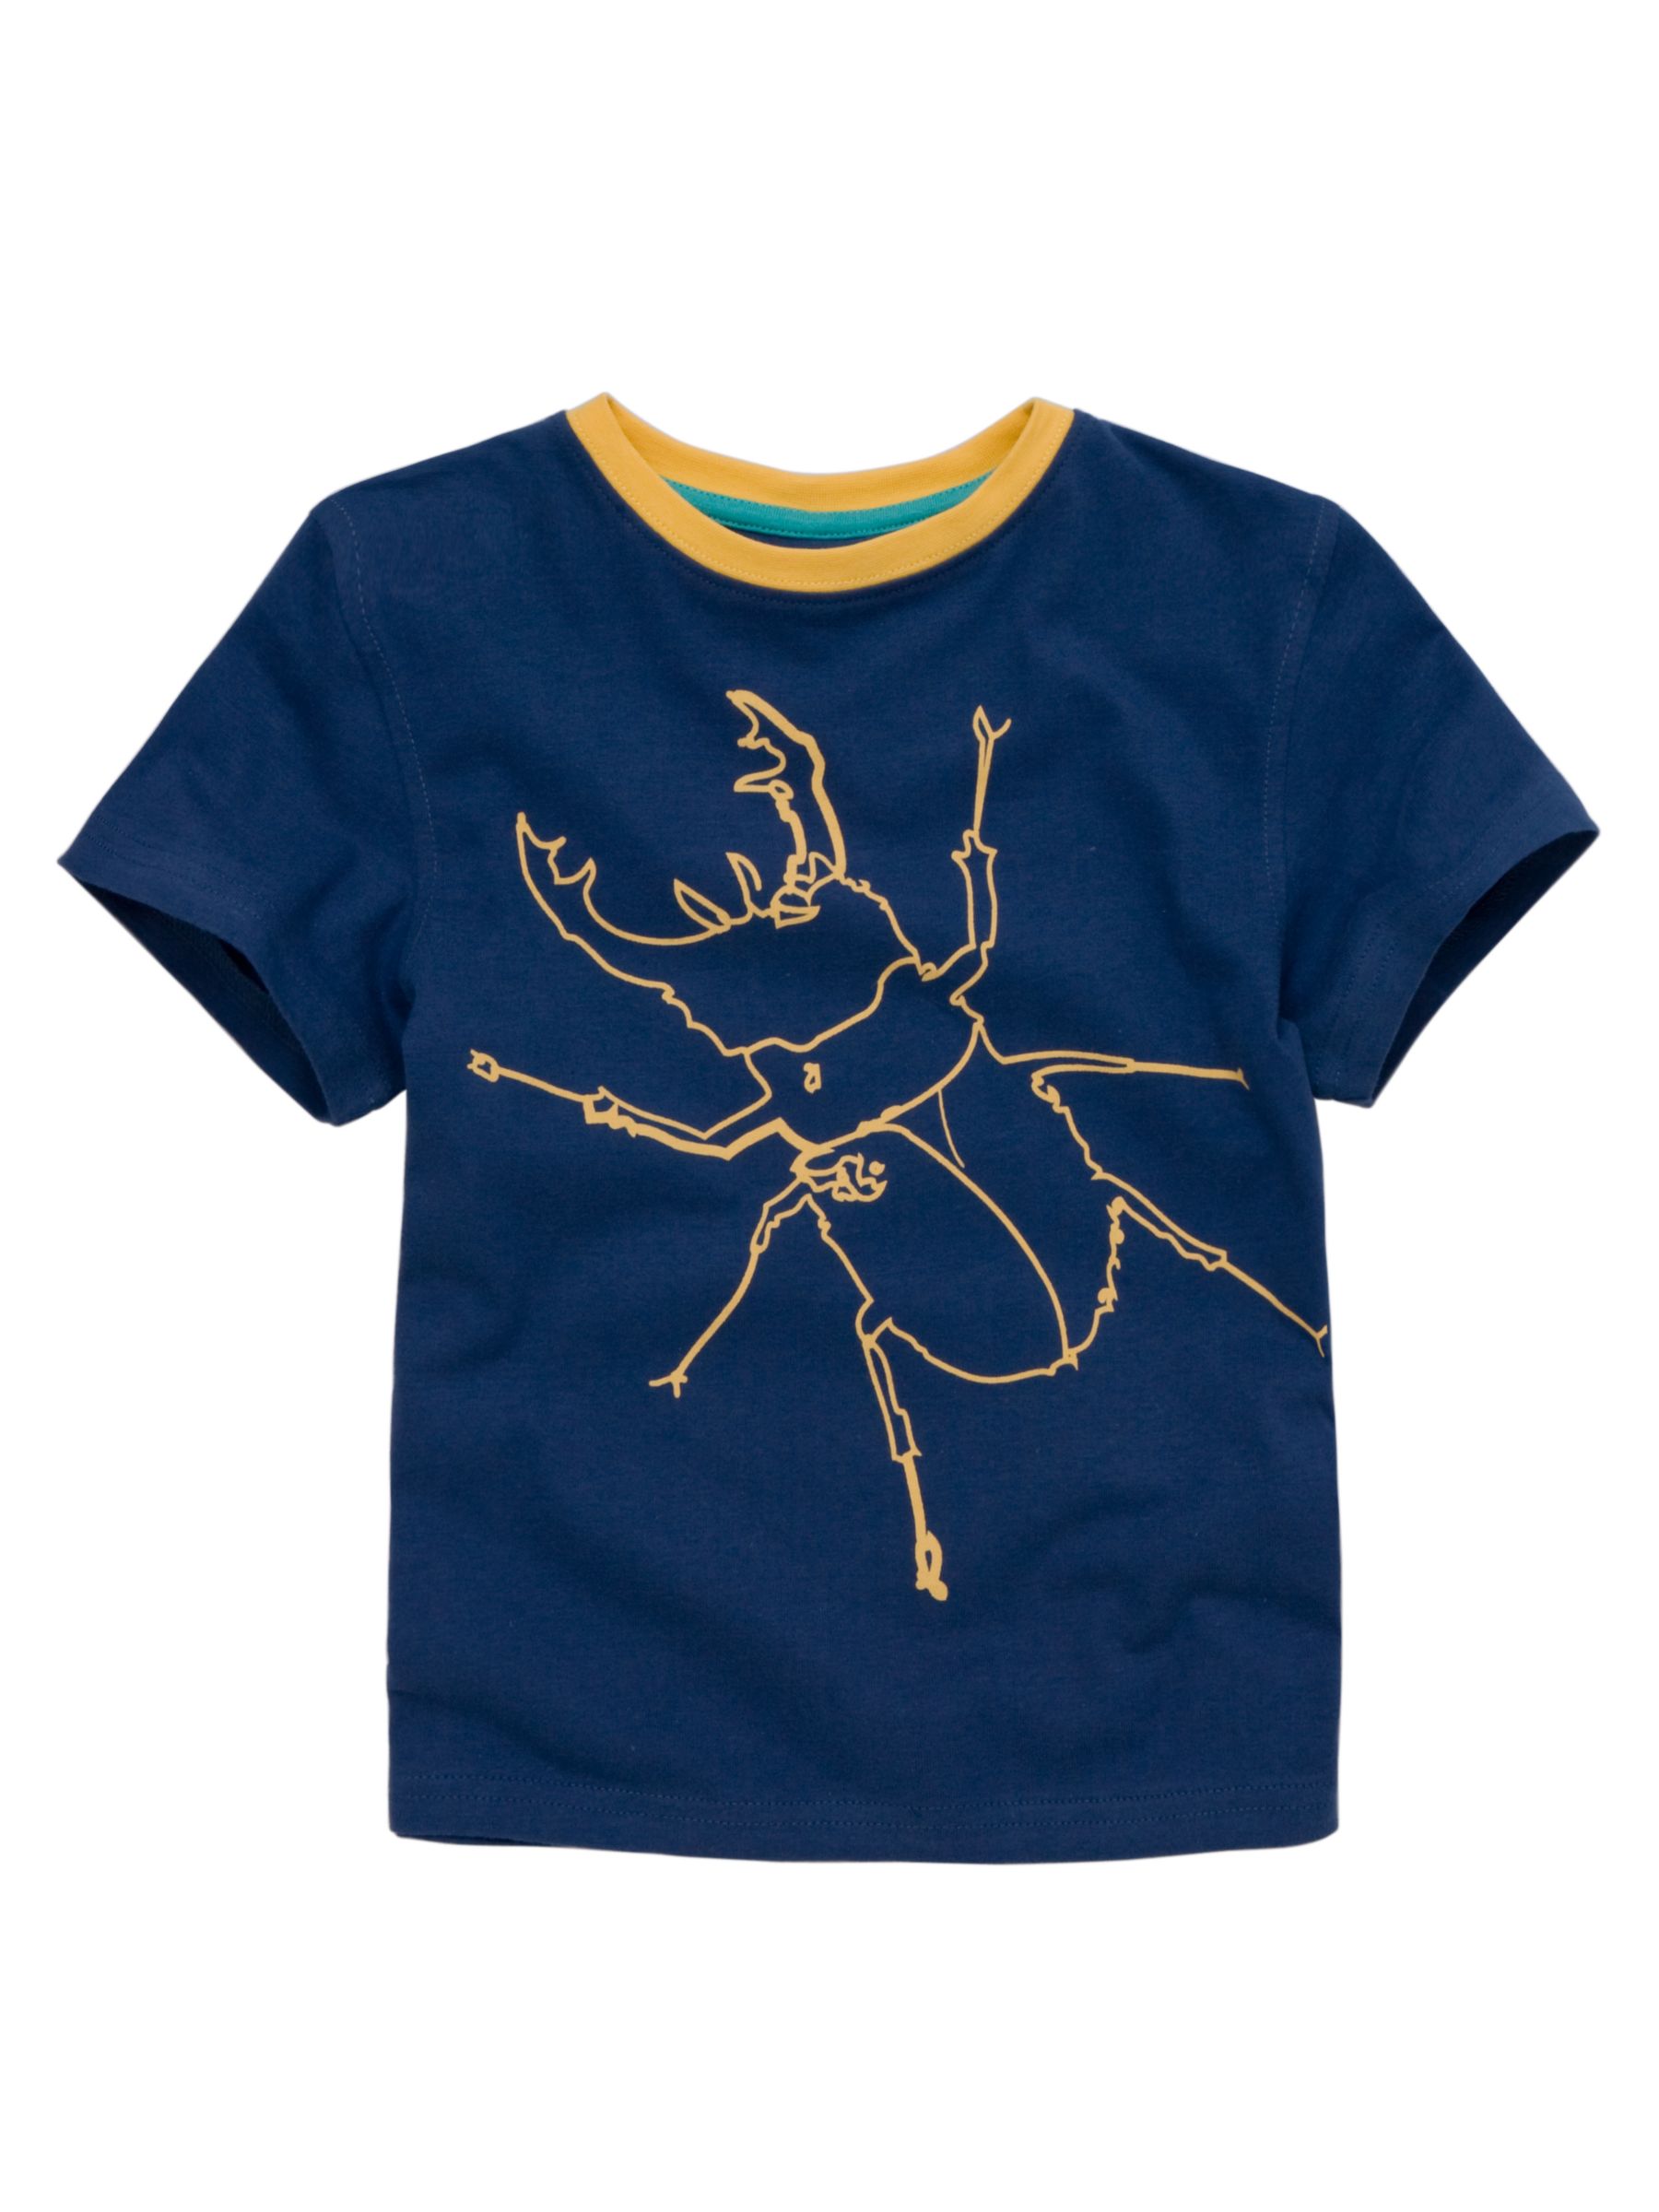 John Lewis Boy Beetle T-Shirt, Navy blue, 9 years